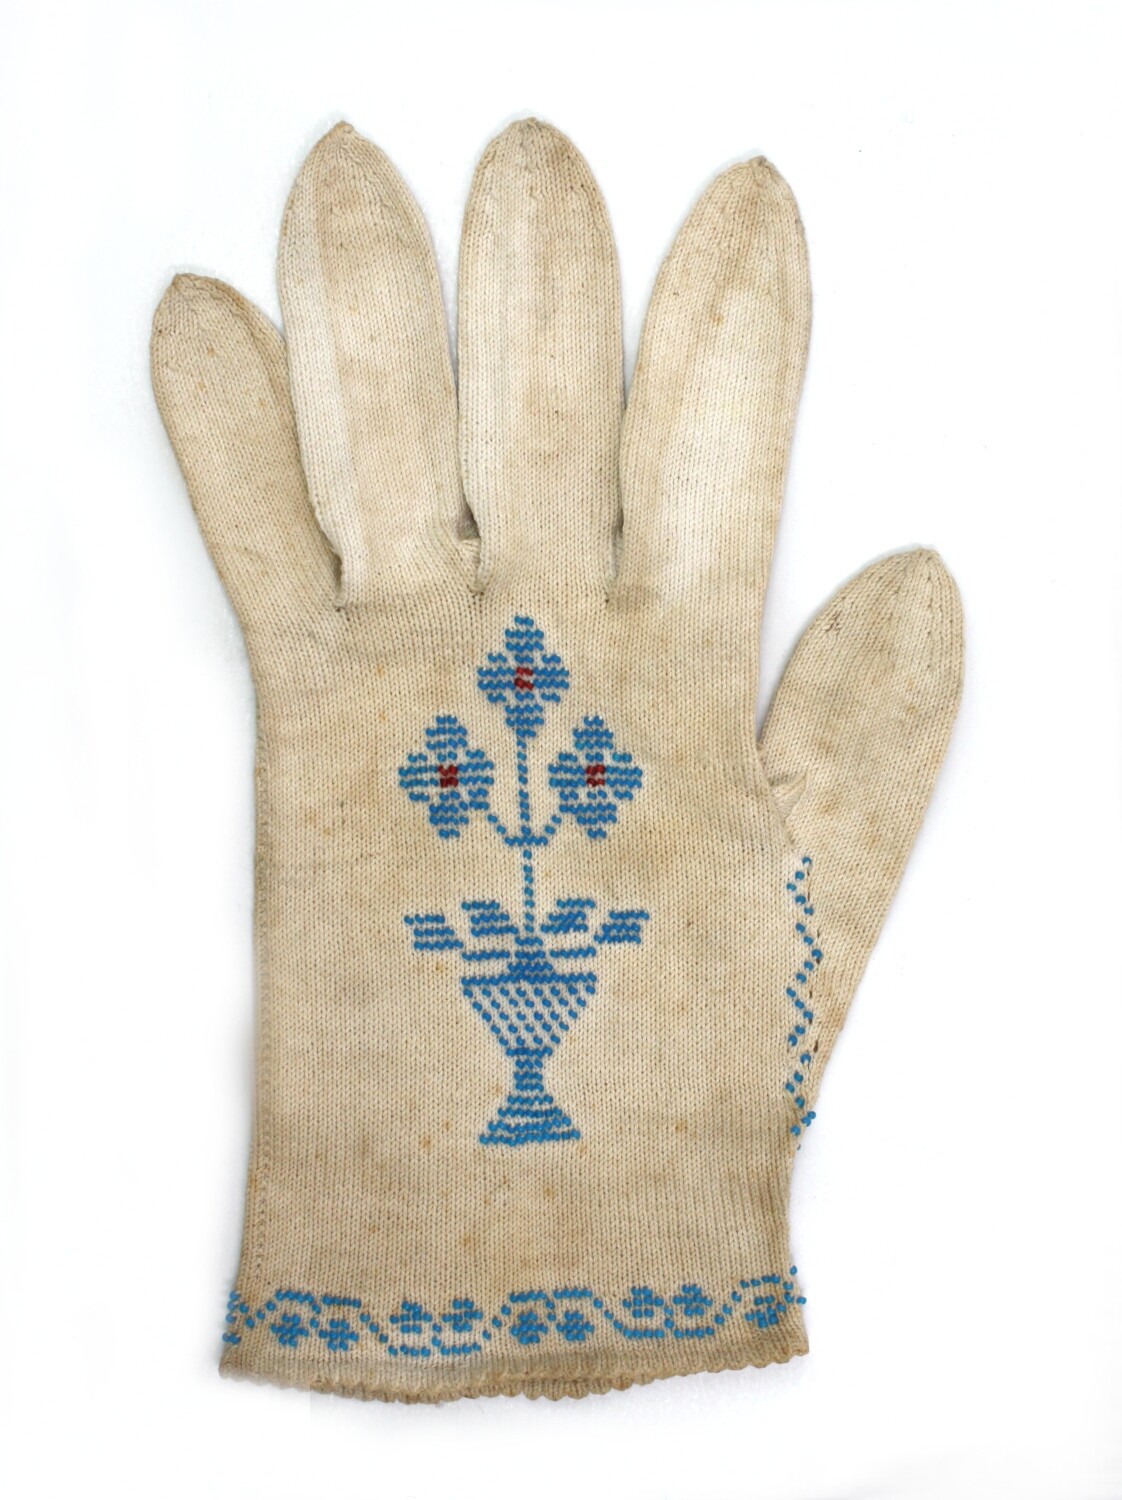 Damenhandschuh (Drilandmuseum CC BY-NC-SA)